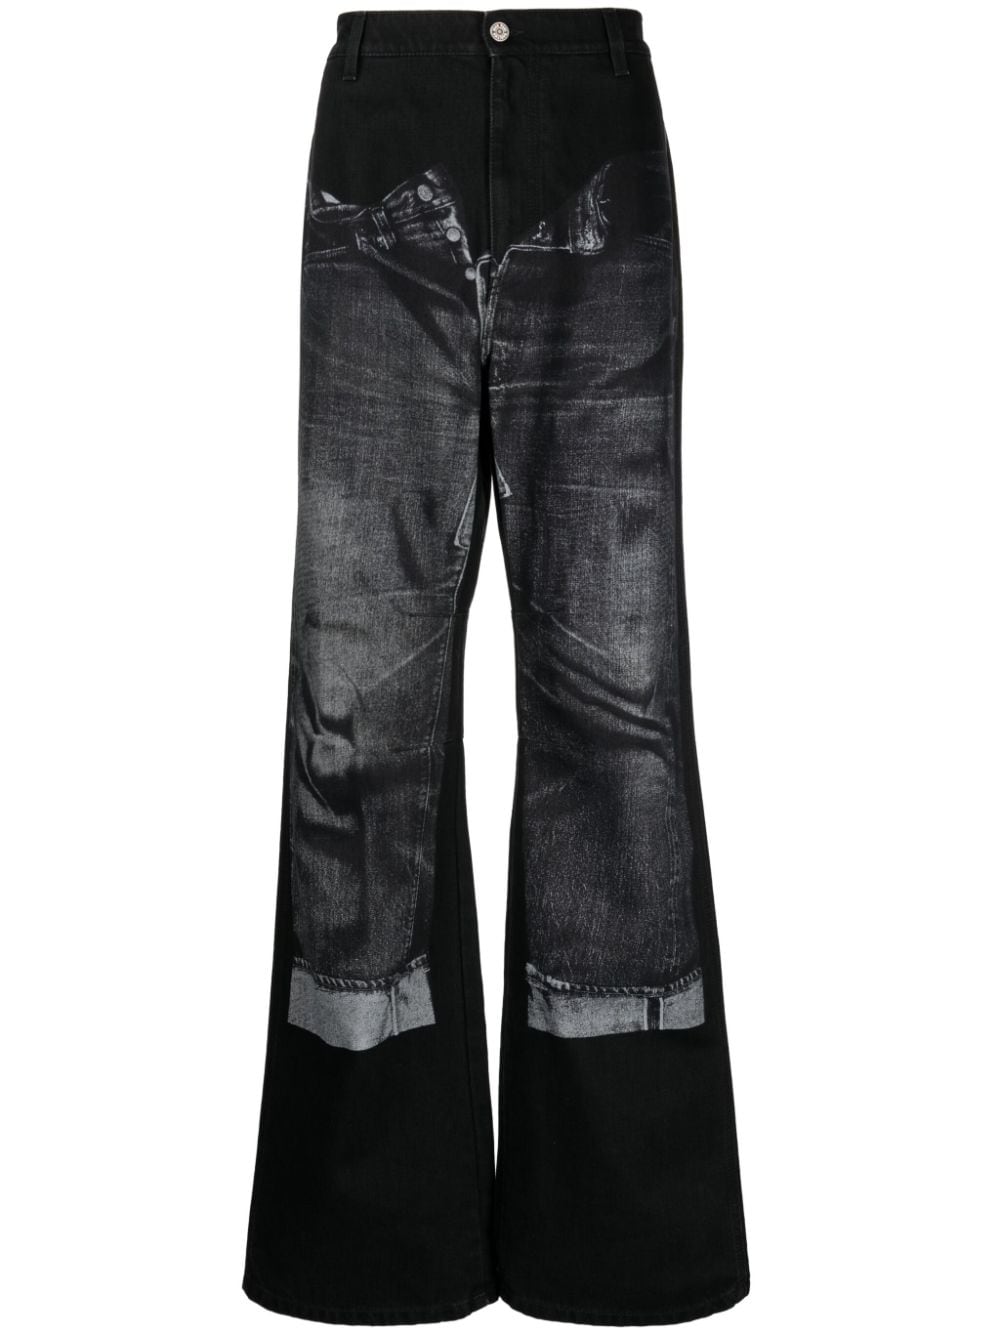 Jean Paul Gaultier trompe l'oeil-print cotton jeans - Black von Jean Paul Gaultier